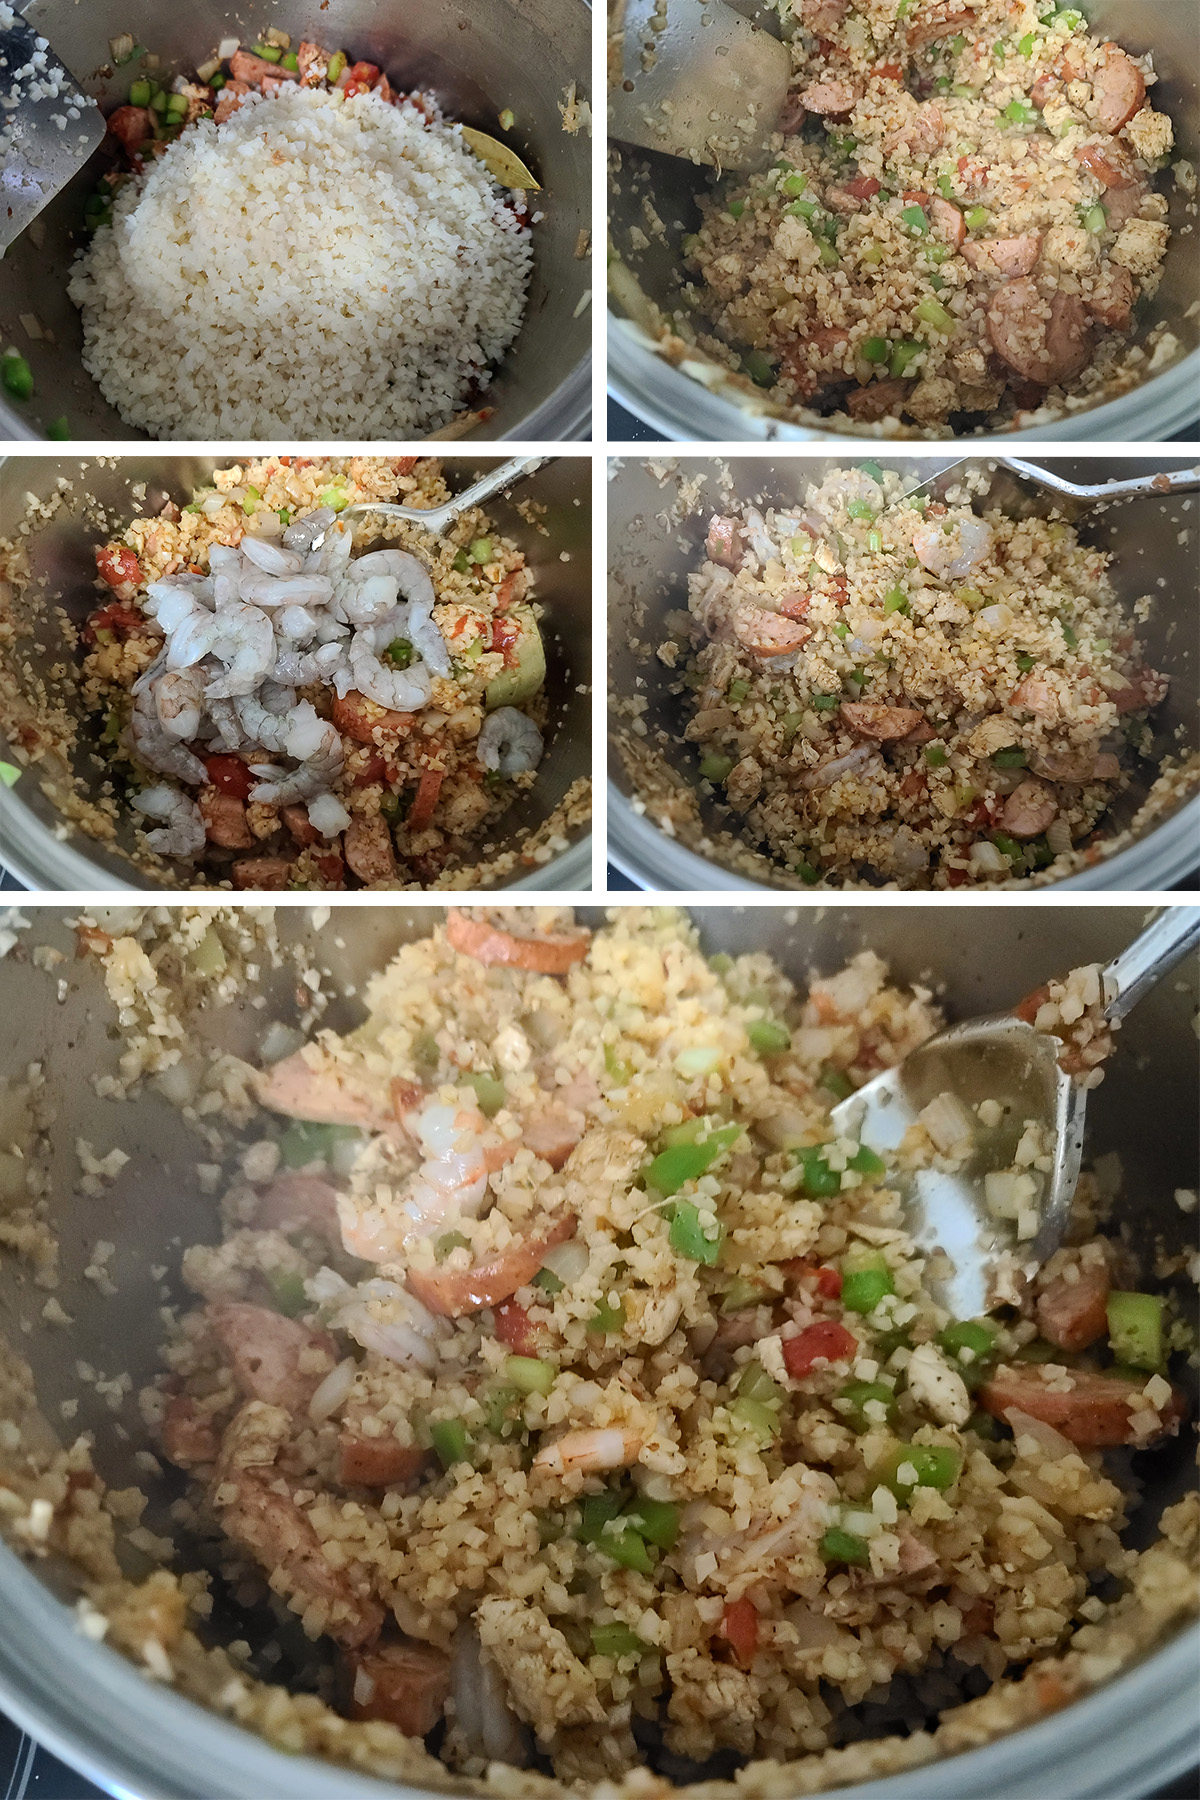 Cauliflower rice and shirmp added to the pot, and the final jambalaya.